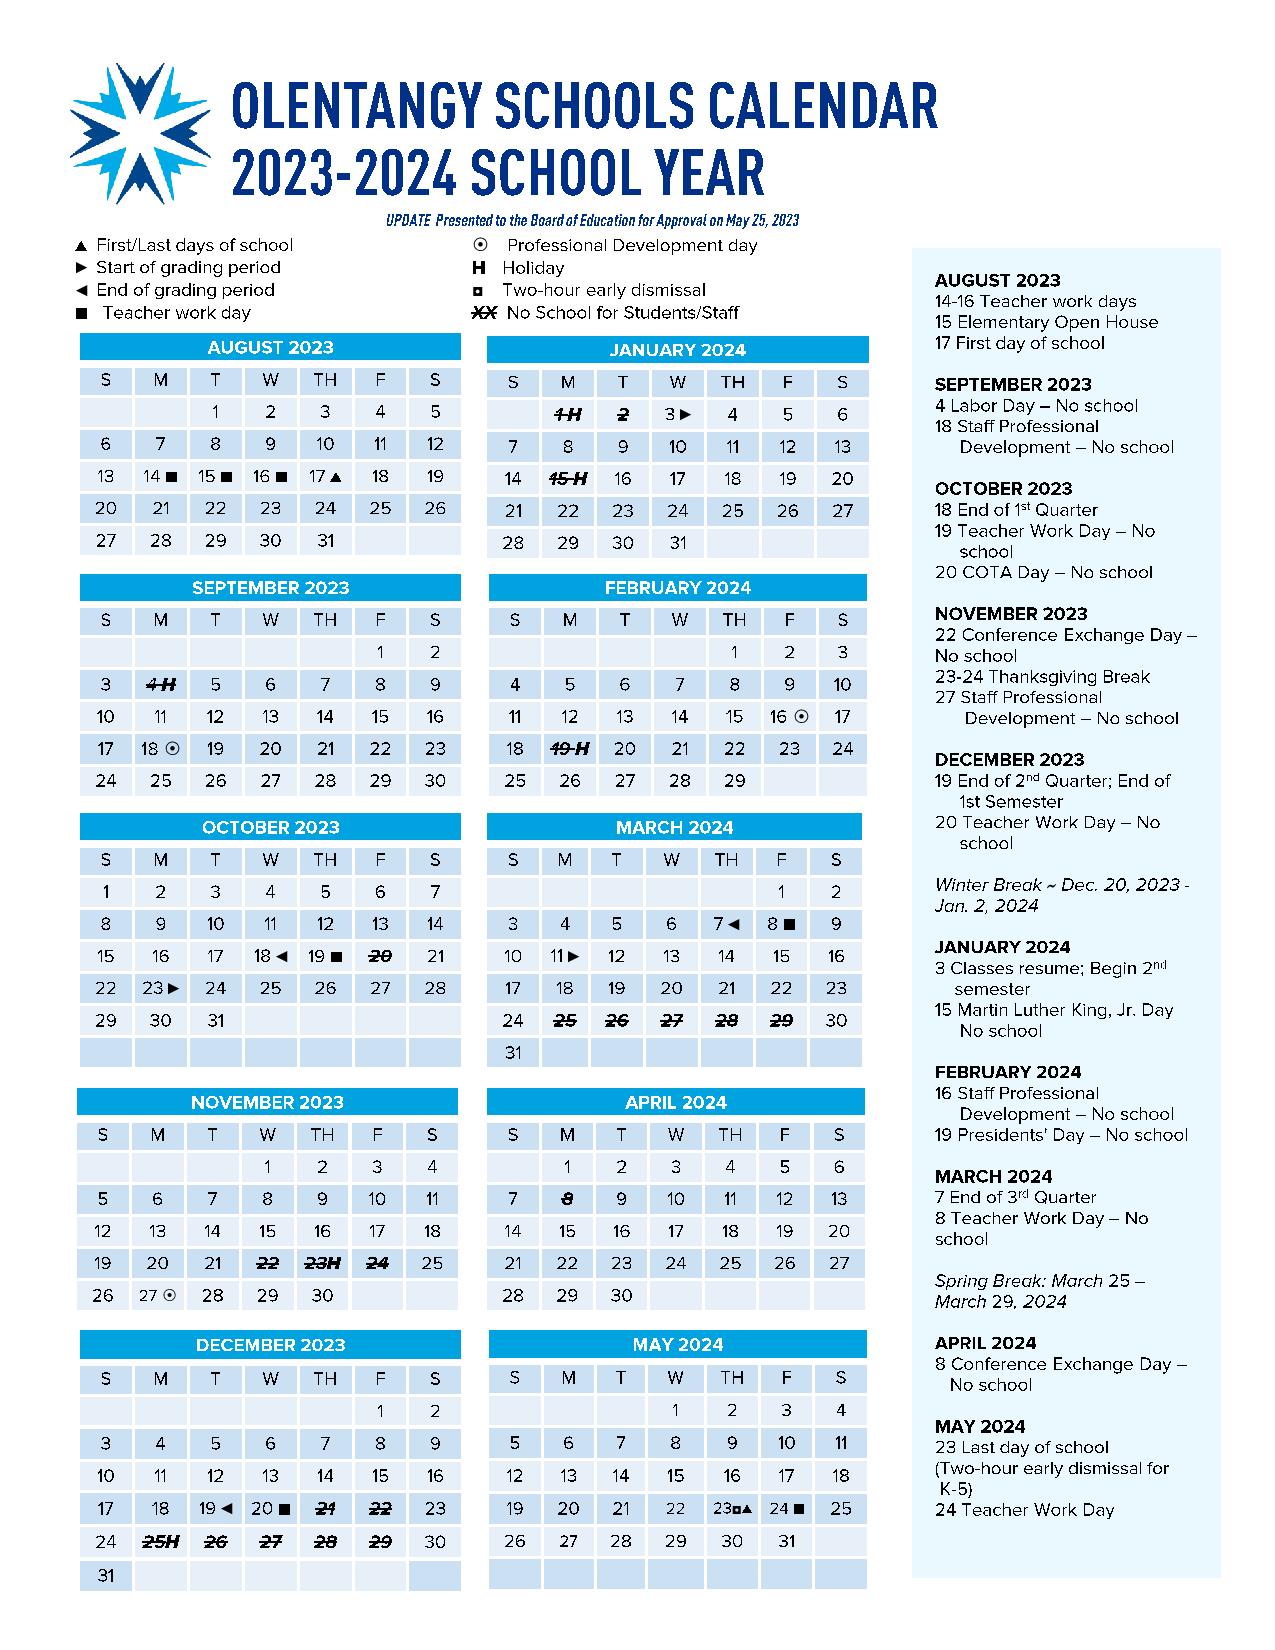 Olentangy Local School District Calendar 20232024 in PDF